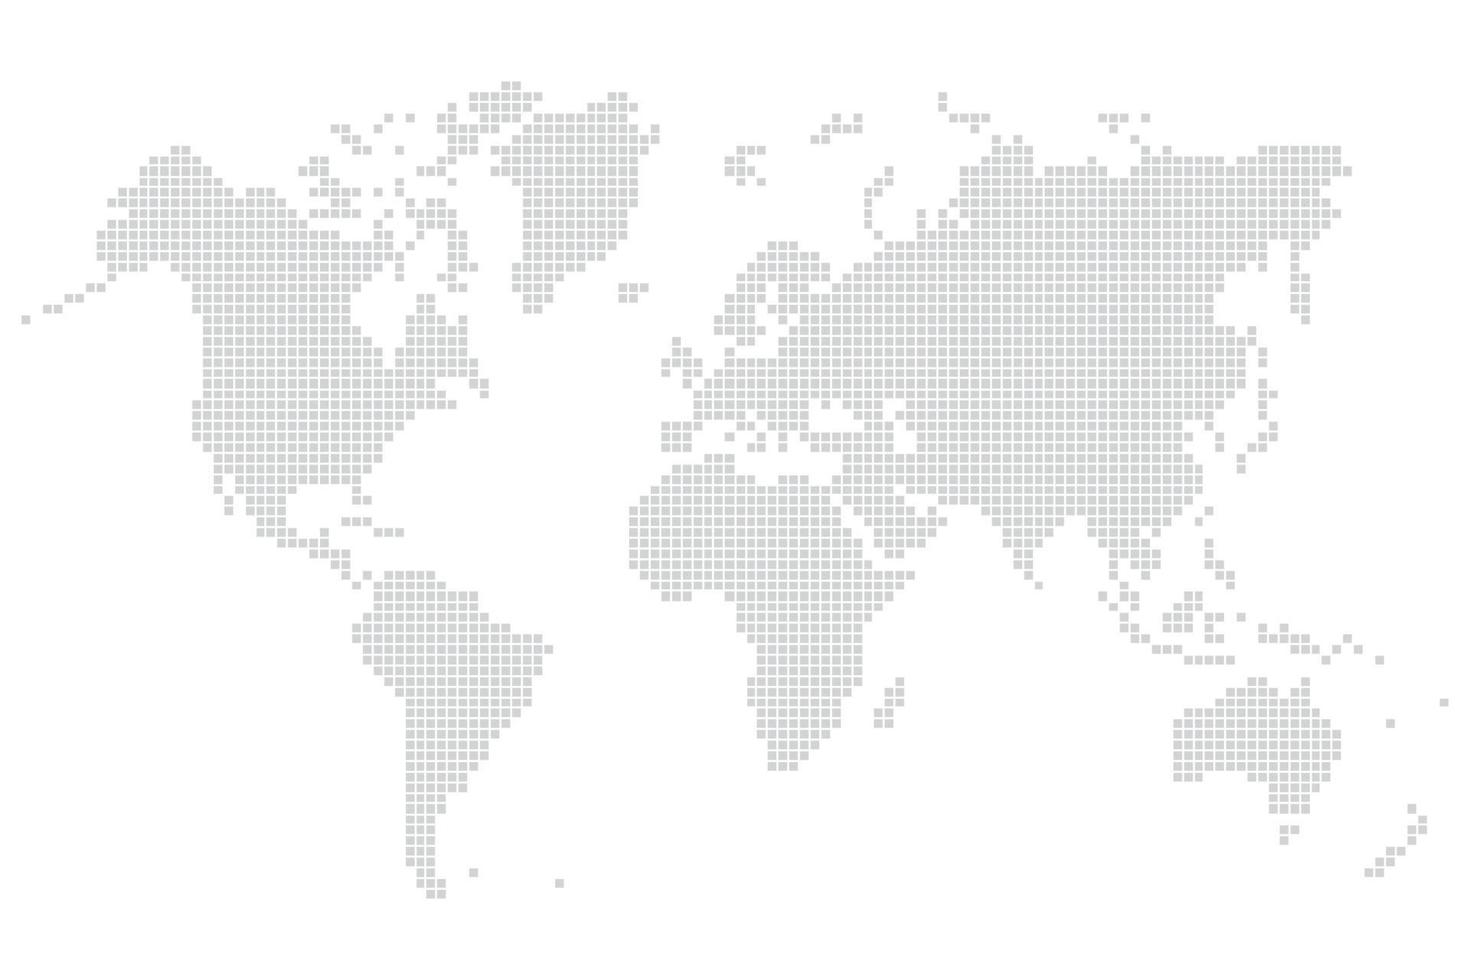 achtergrond achtergrond wereldkaart maken van vierkante stippen. vector illustratie